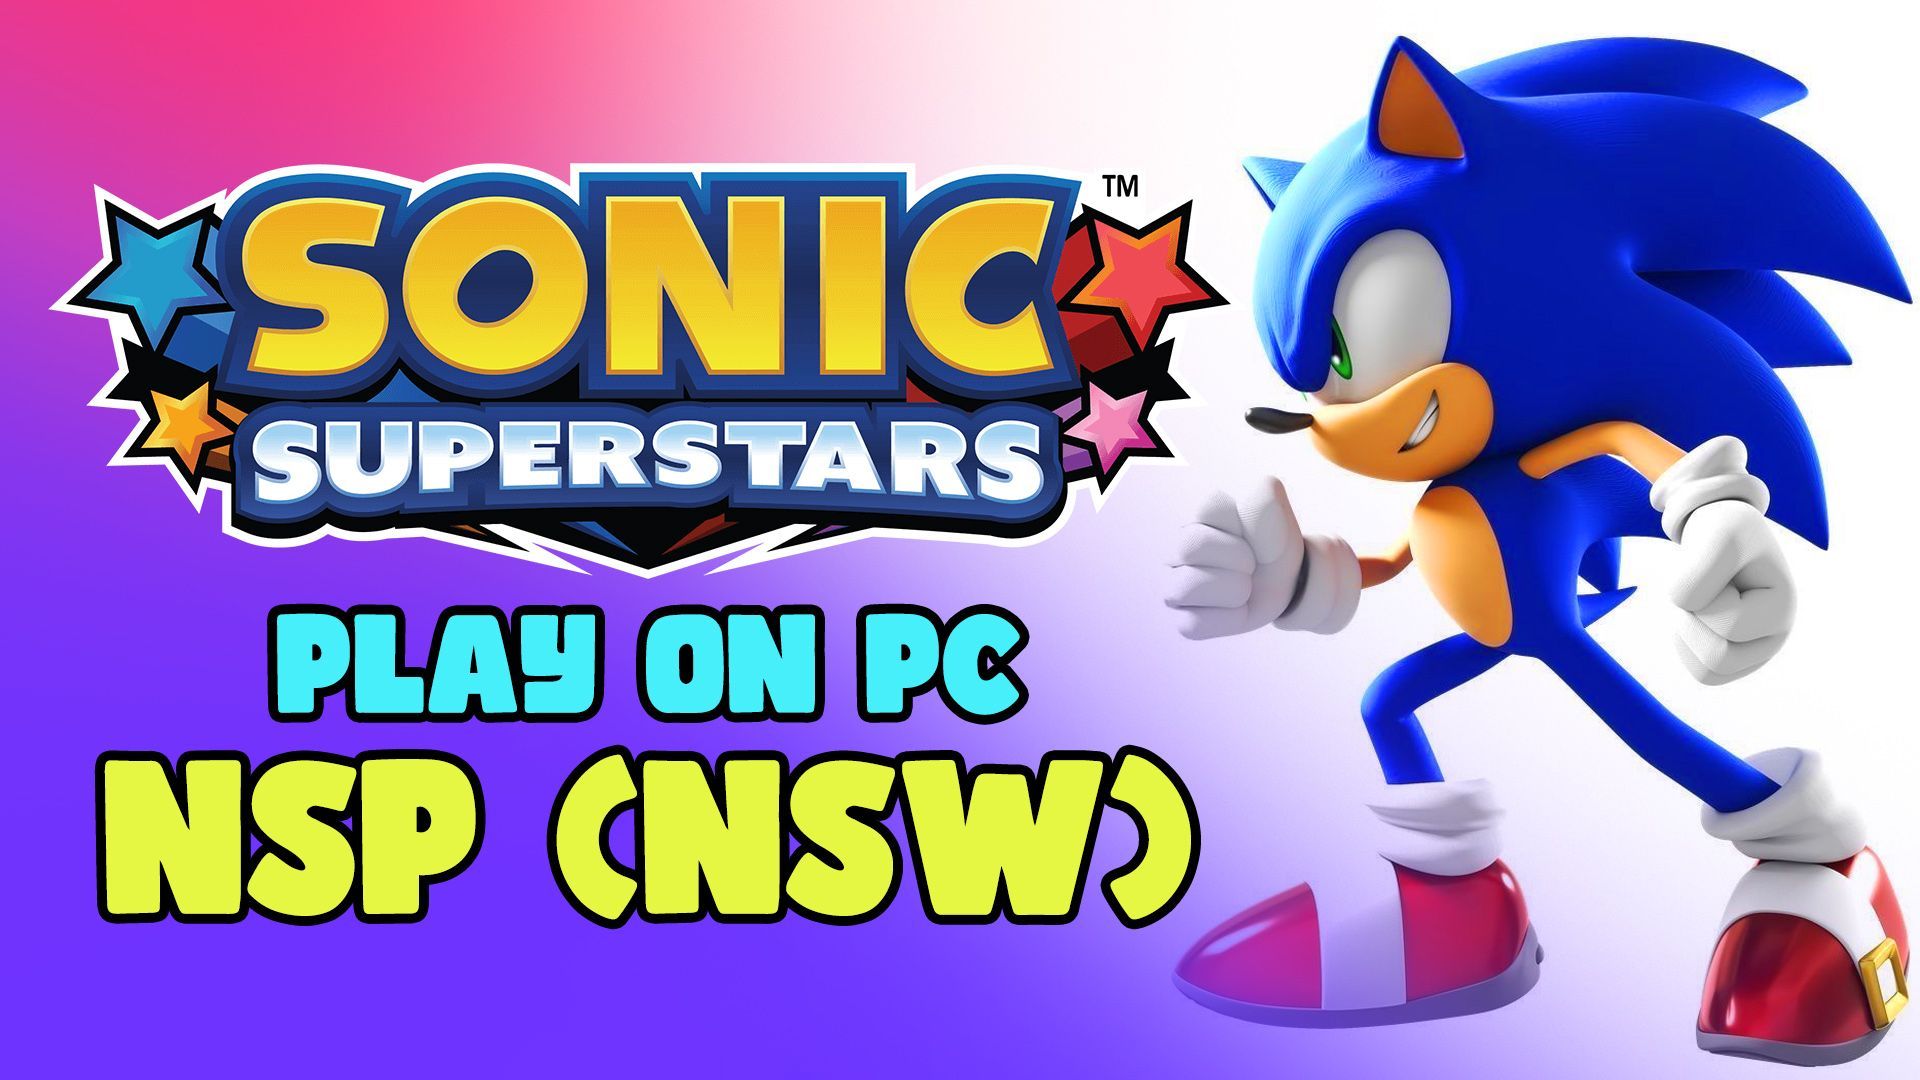 Sonic Superstars - Download